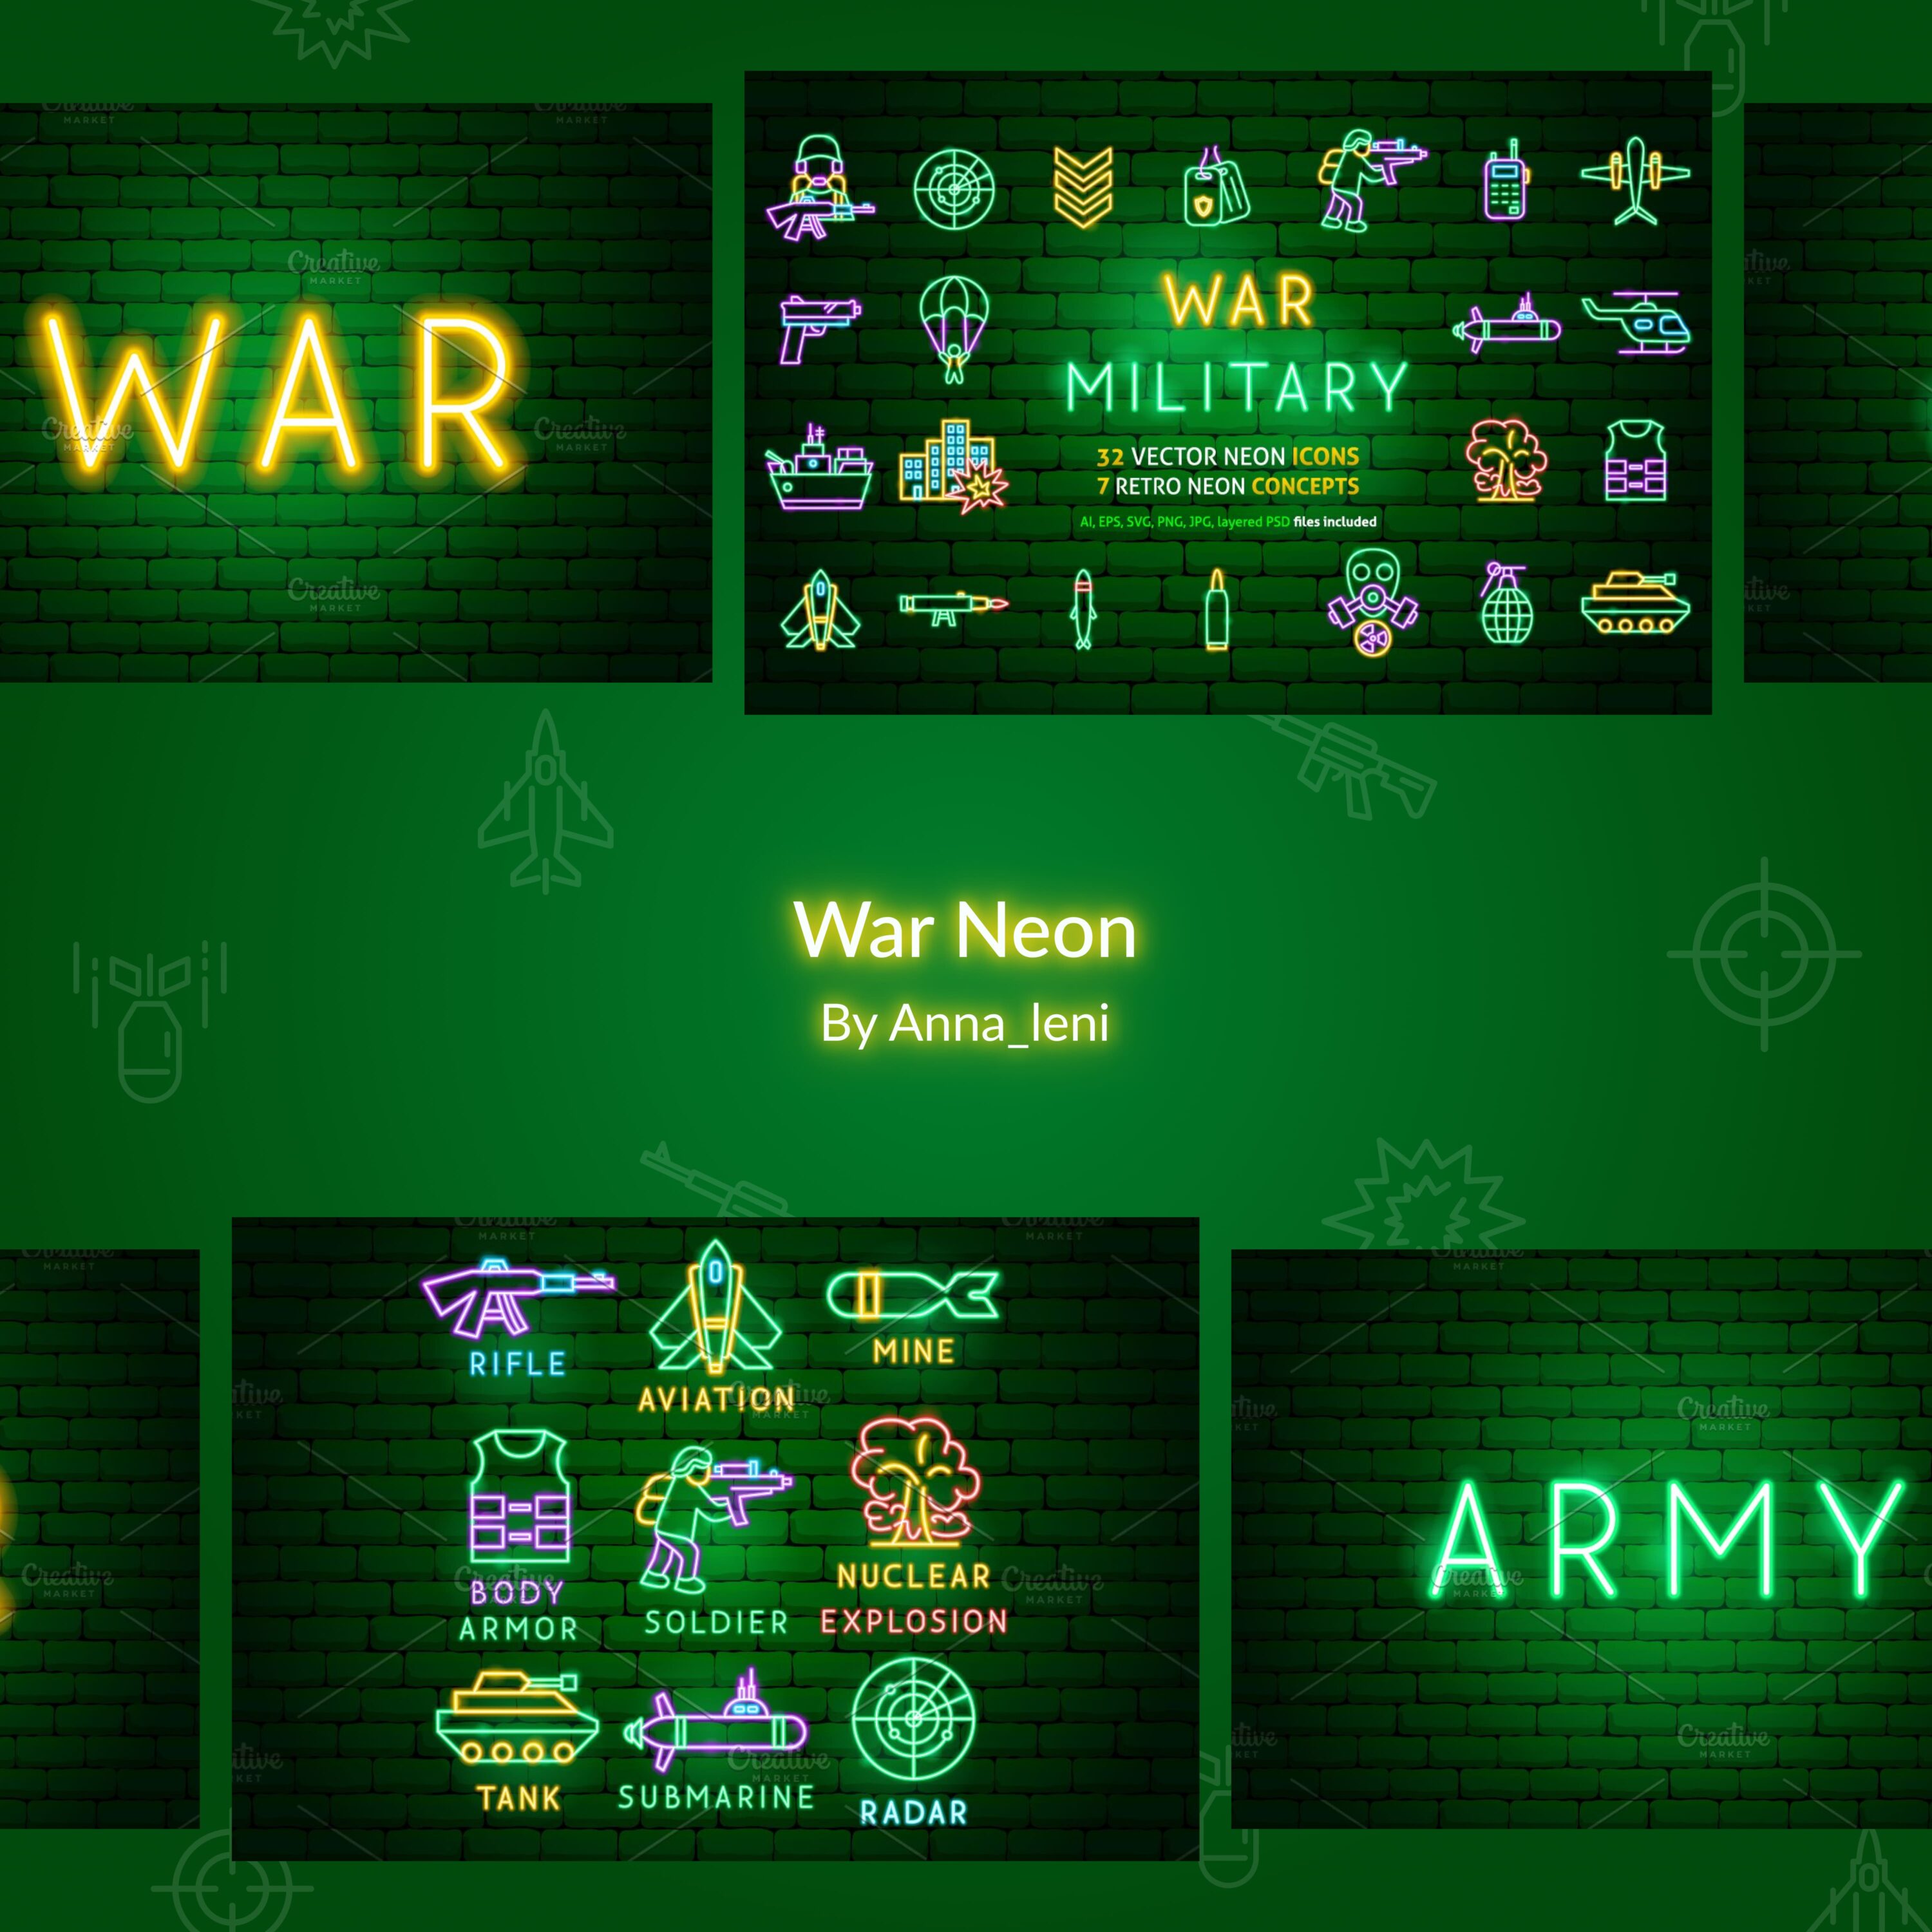 War Neon cover.